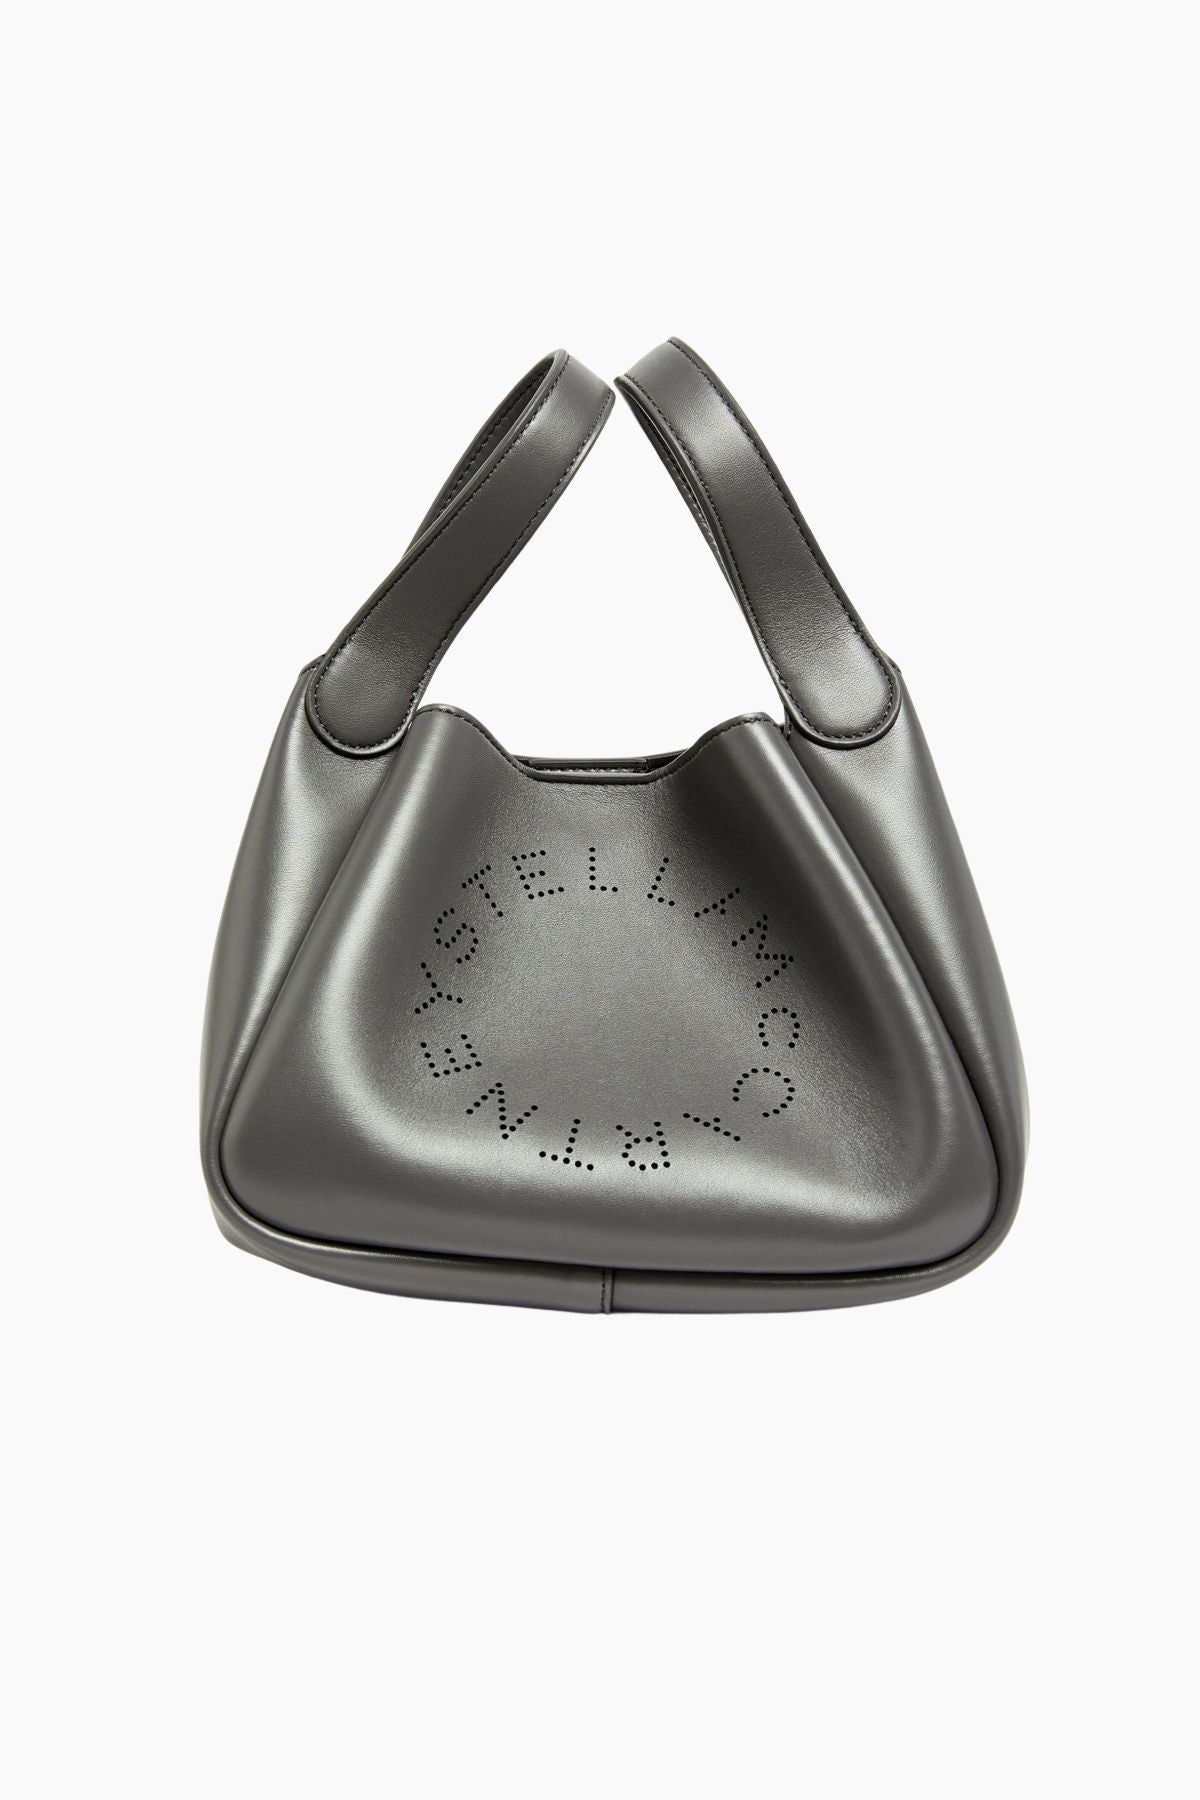 Stella McCartney Logo Double Top Handle Crossbody bag - Slate